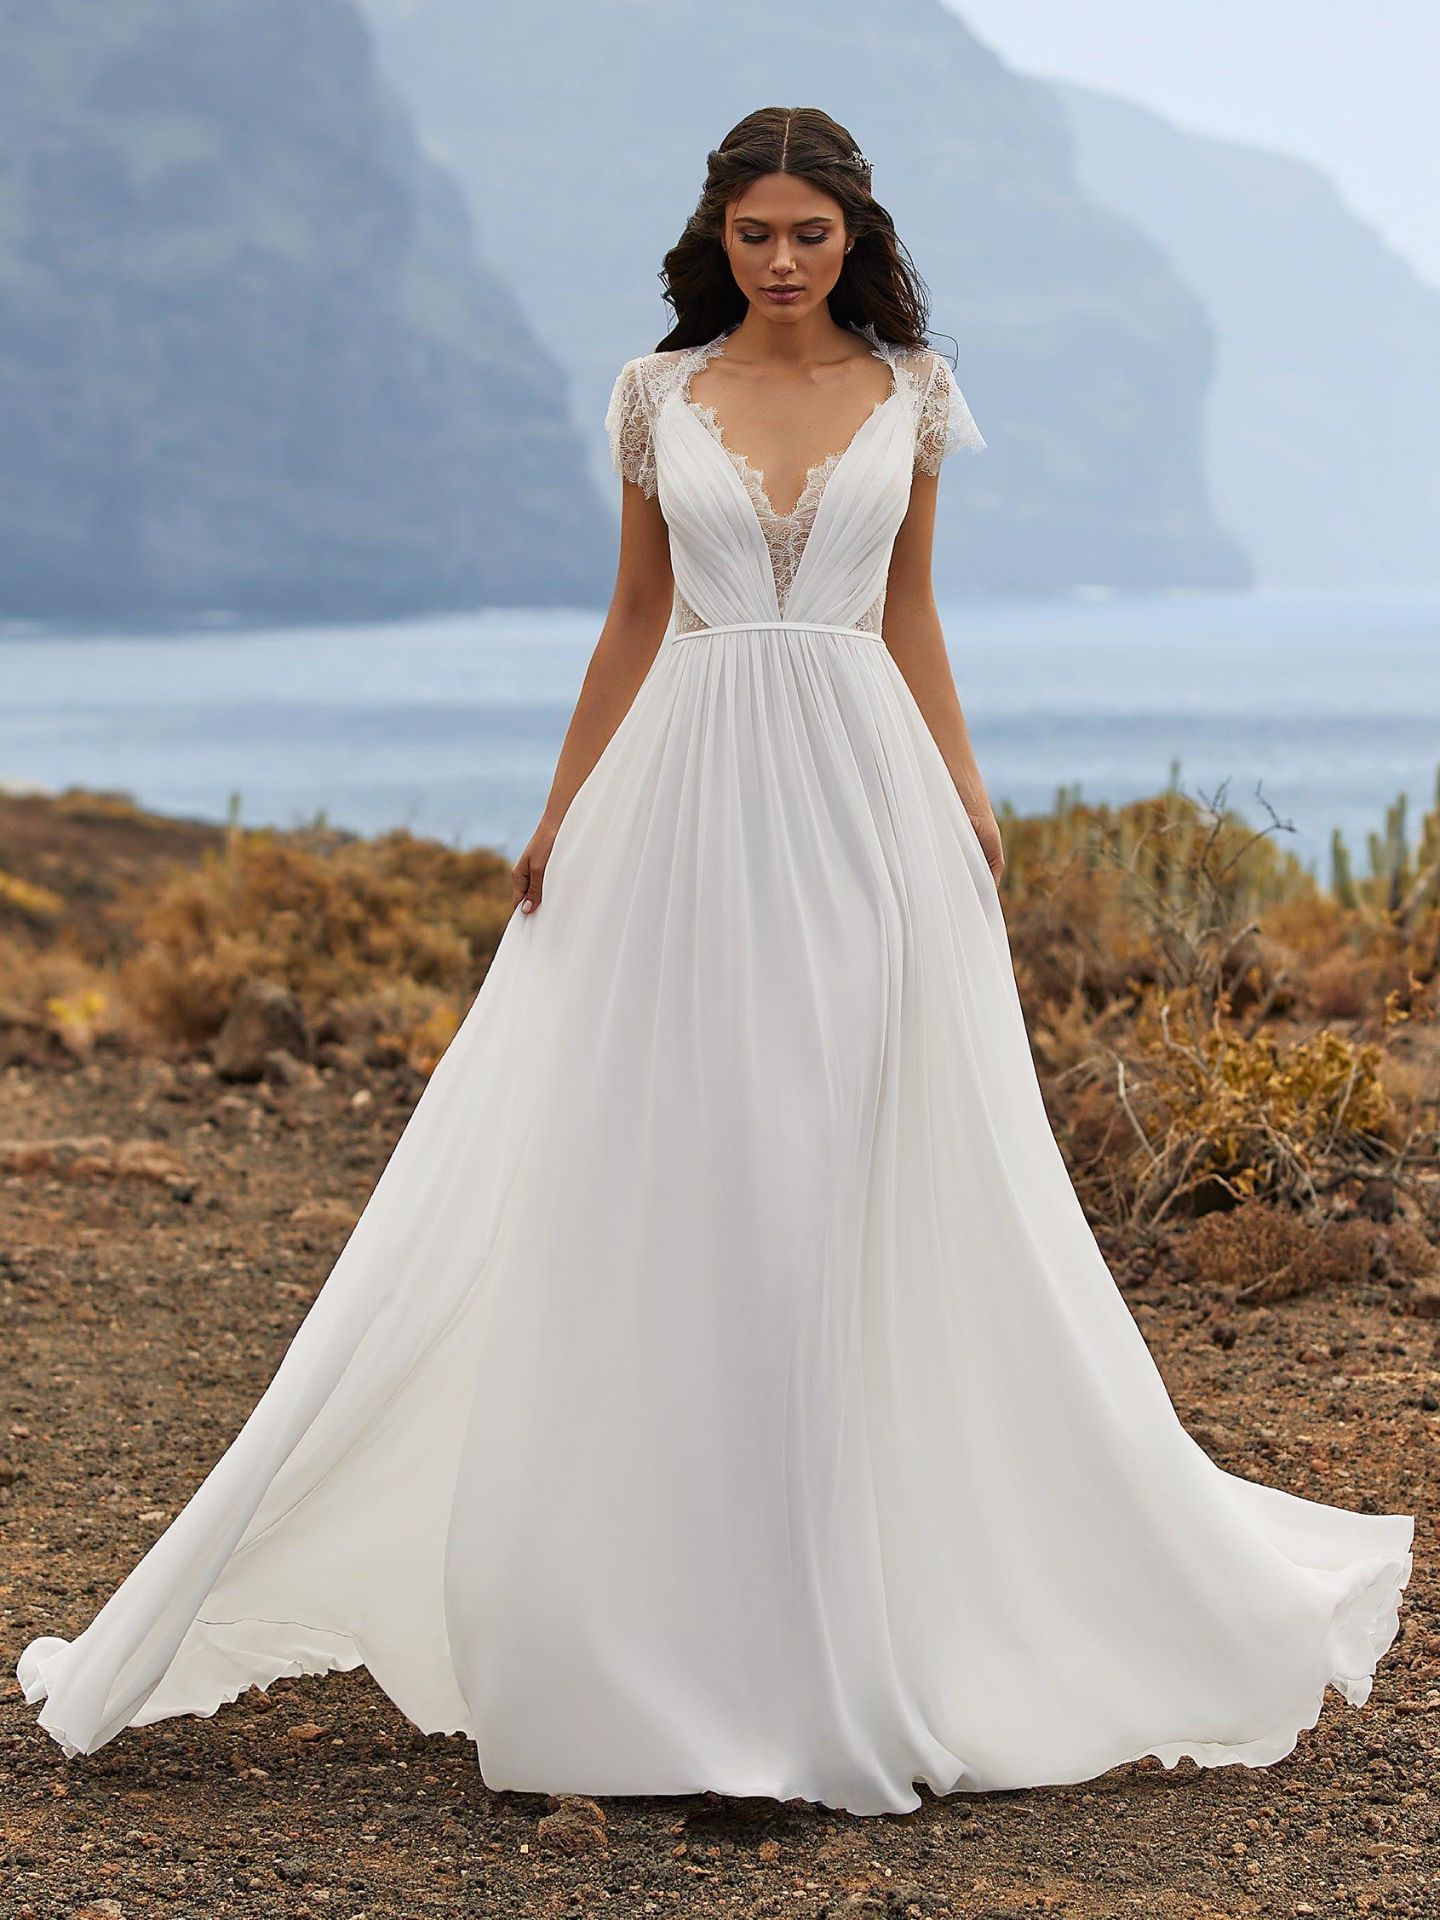 1 x PRONOVIAS 'Carlyle' Designer Goddess-style Wedding Dress Bridal Gown - Original RRP £1,660 - Image 2 of 15